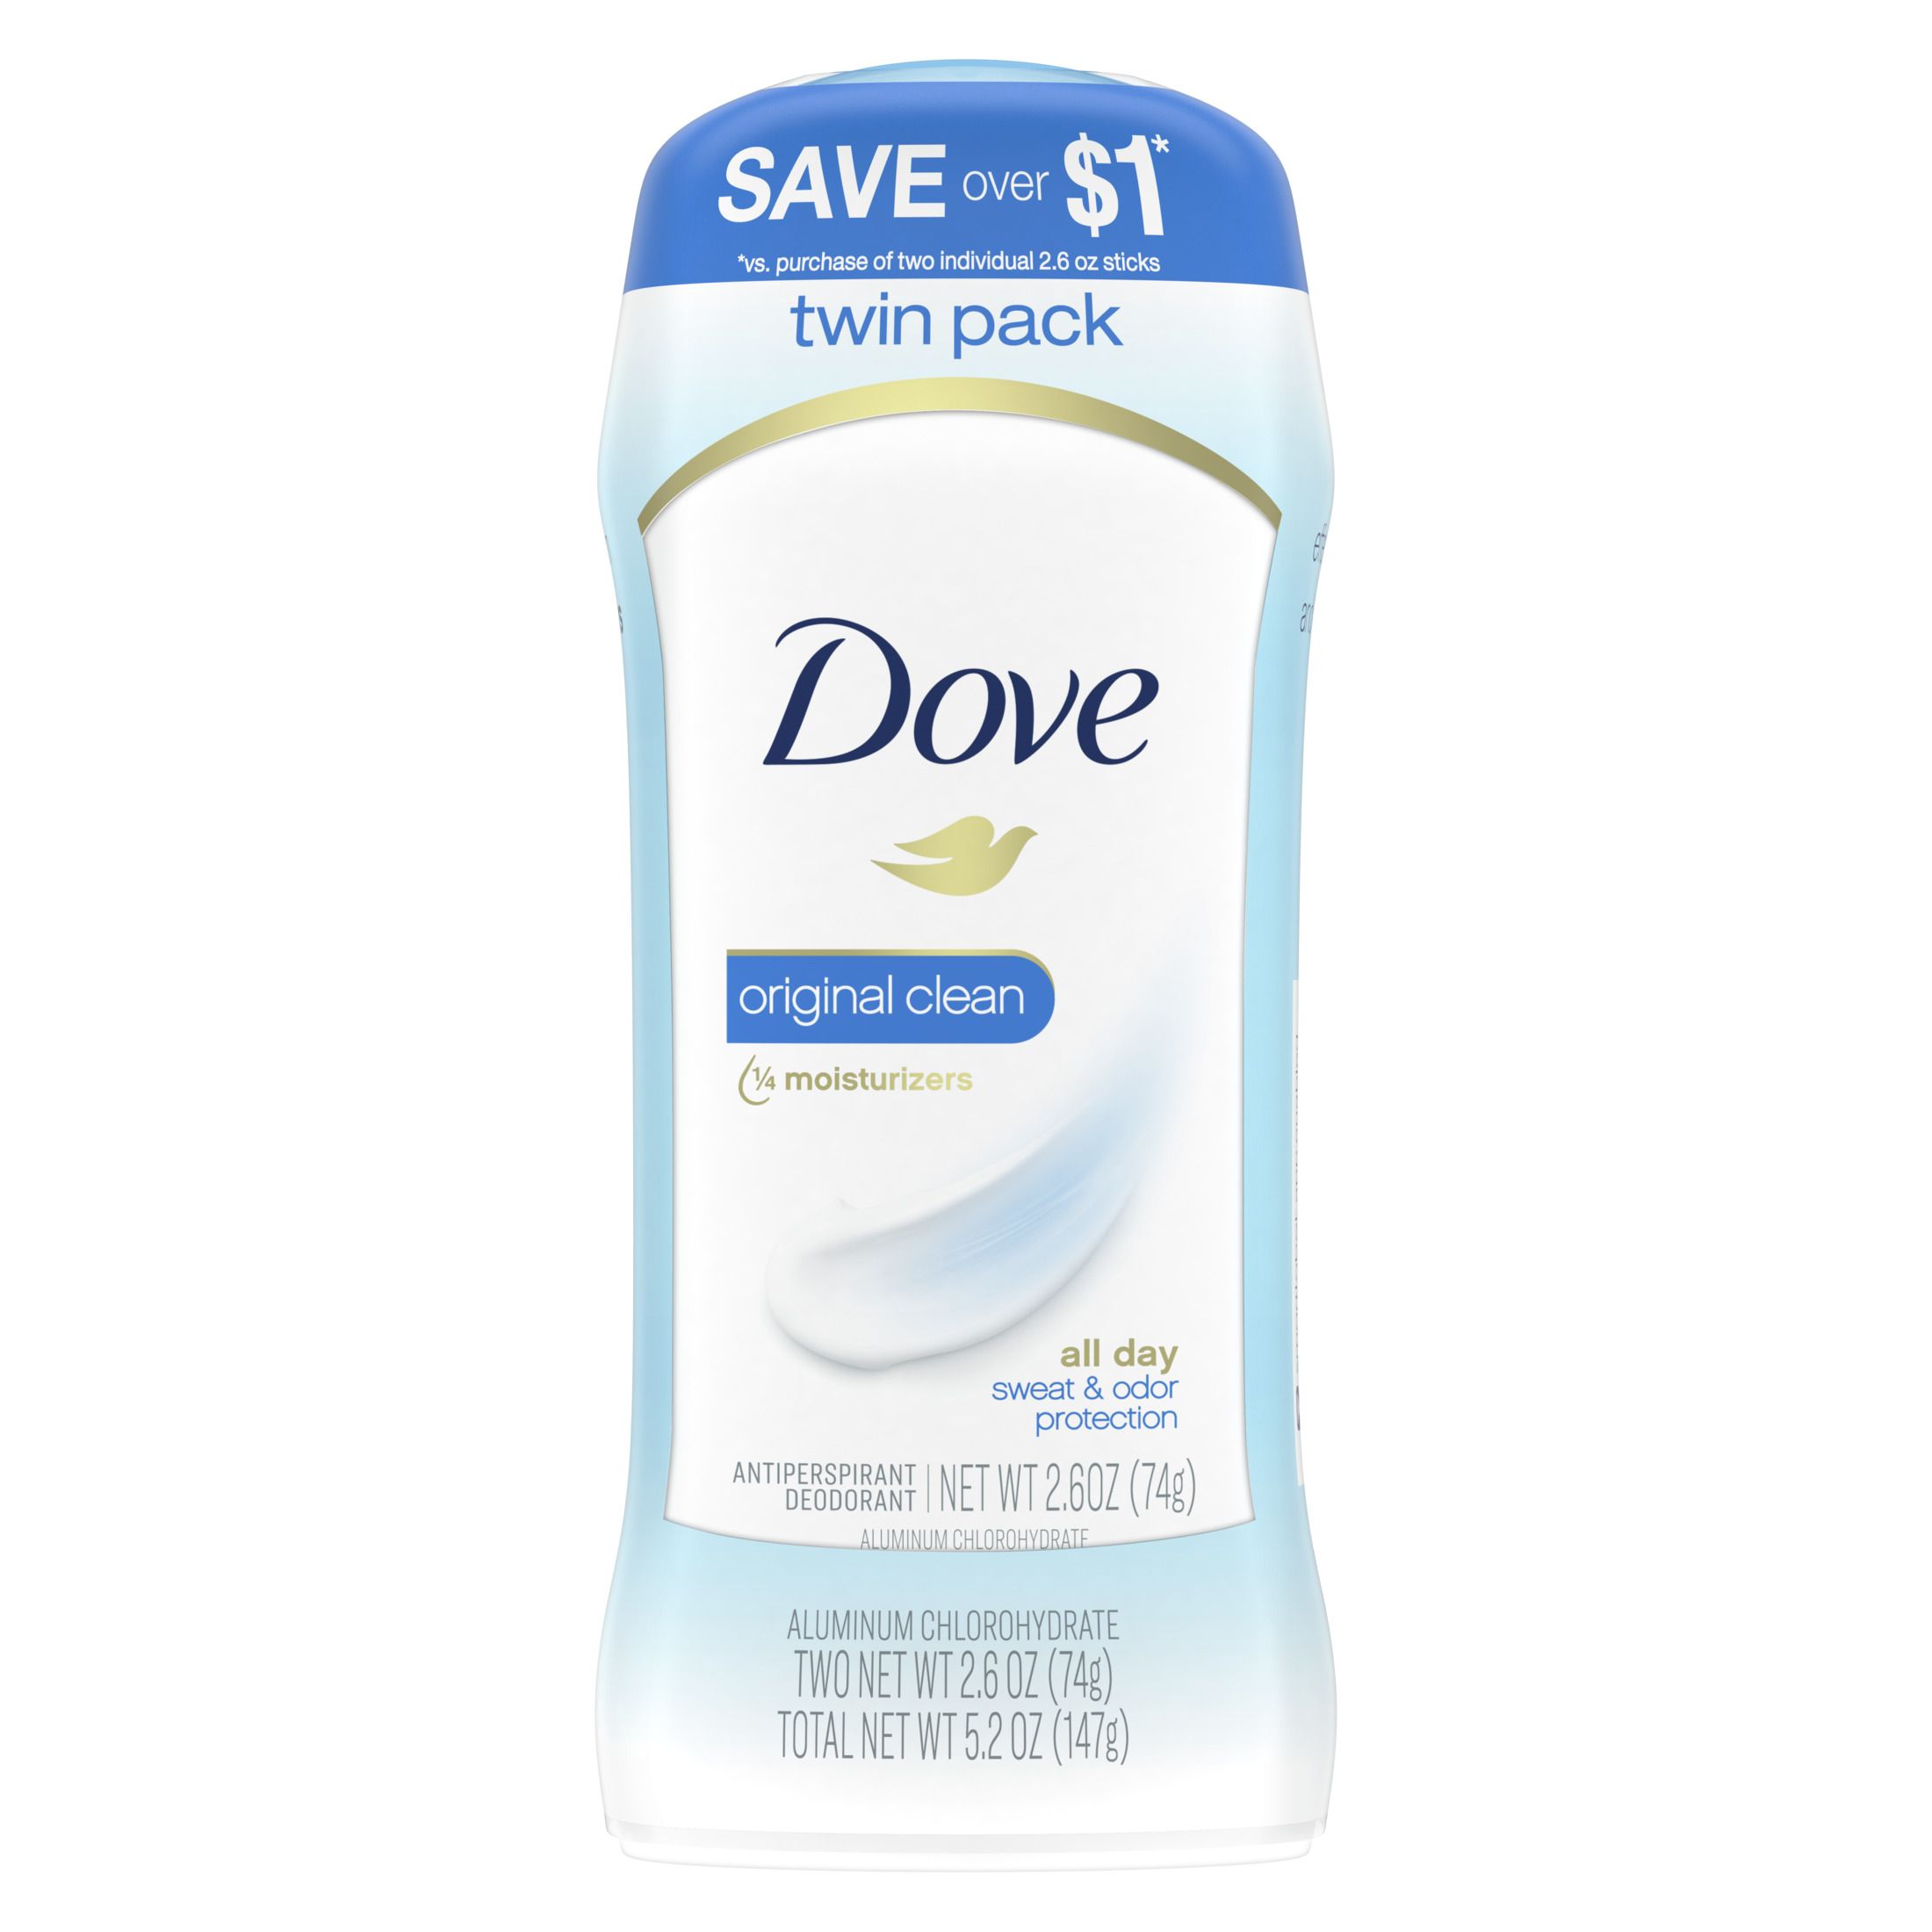 Dove Women's Antiperspirant Deodorant Stick Twin Pack, Original Clean, 2.6 oz - image 1 of 12